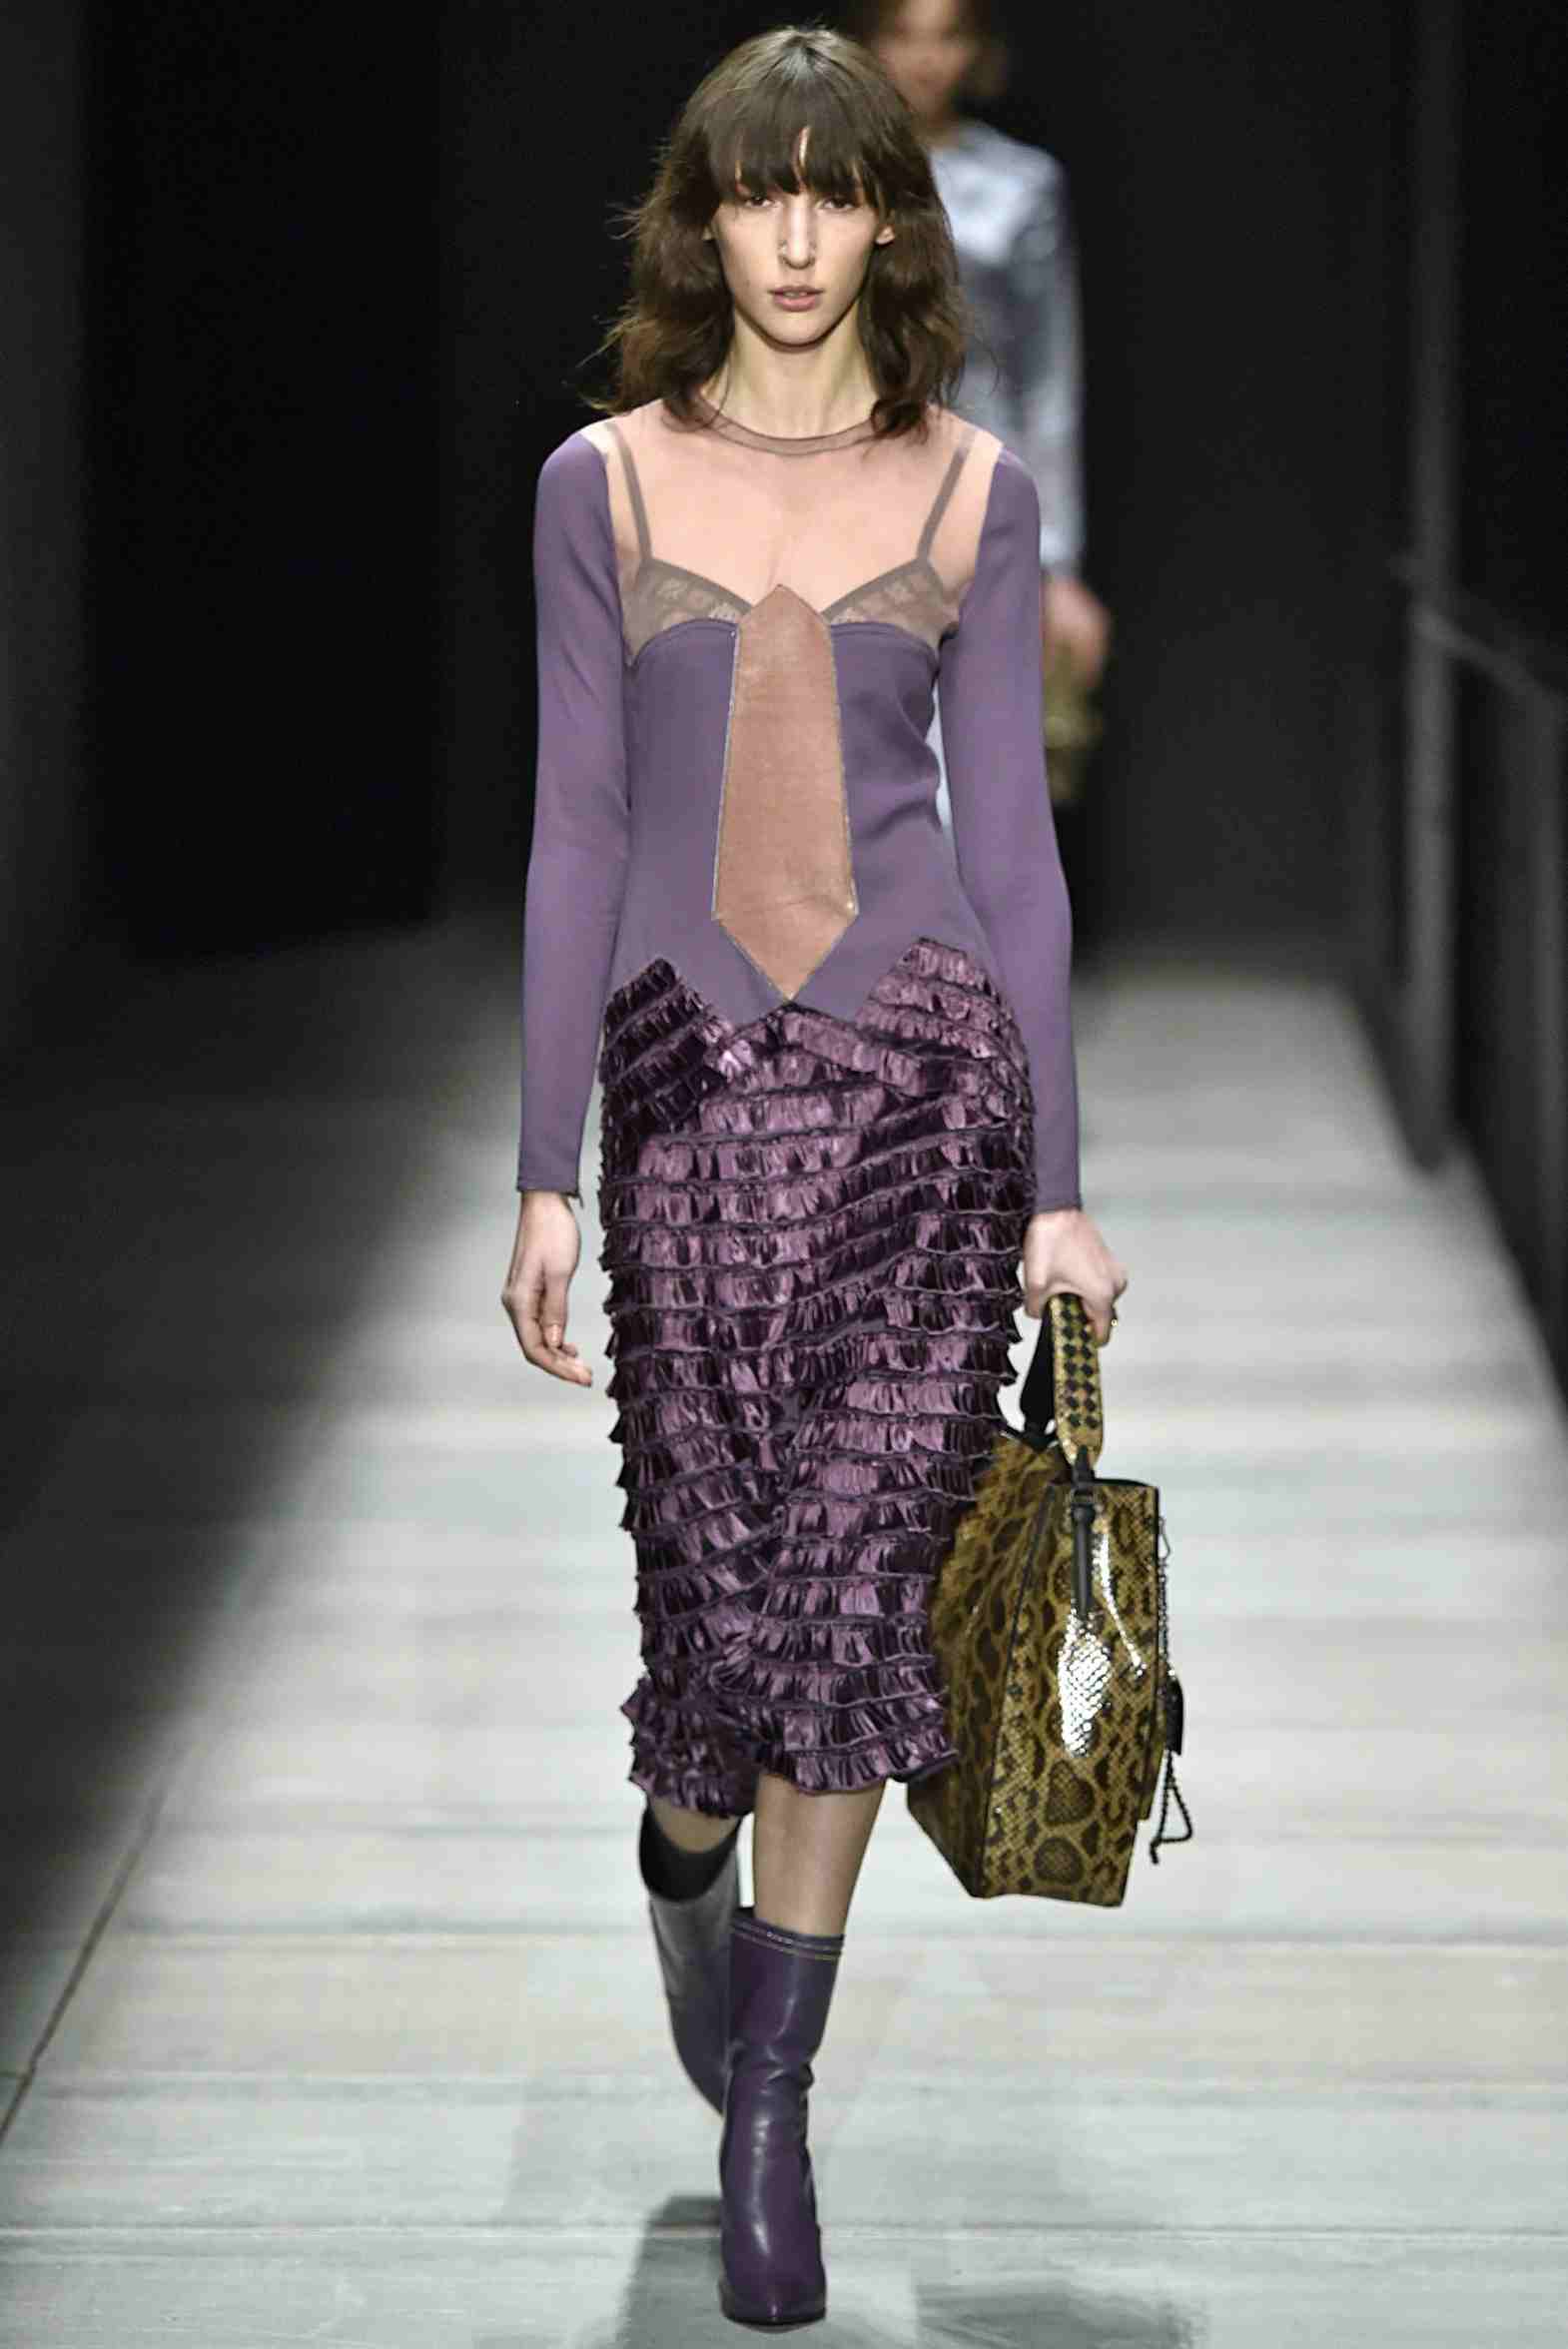 Violet trend color mid-skirt with sweater combine handbag in snake pattern